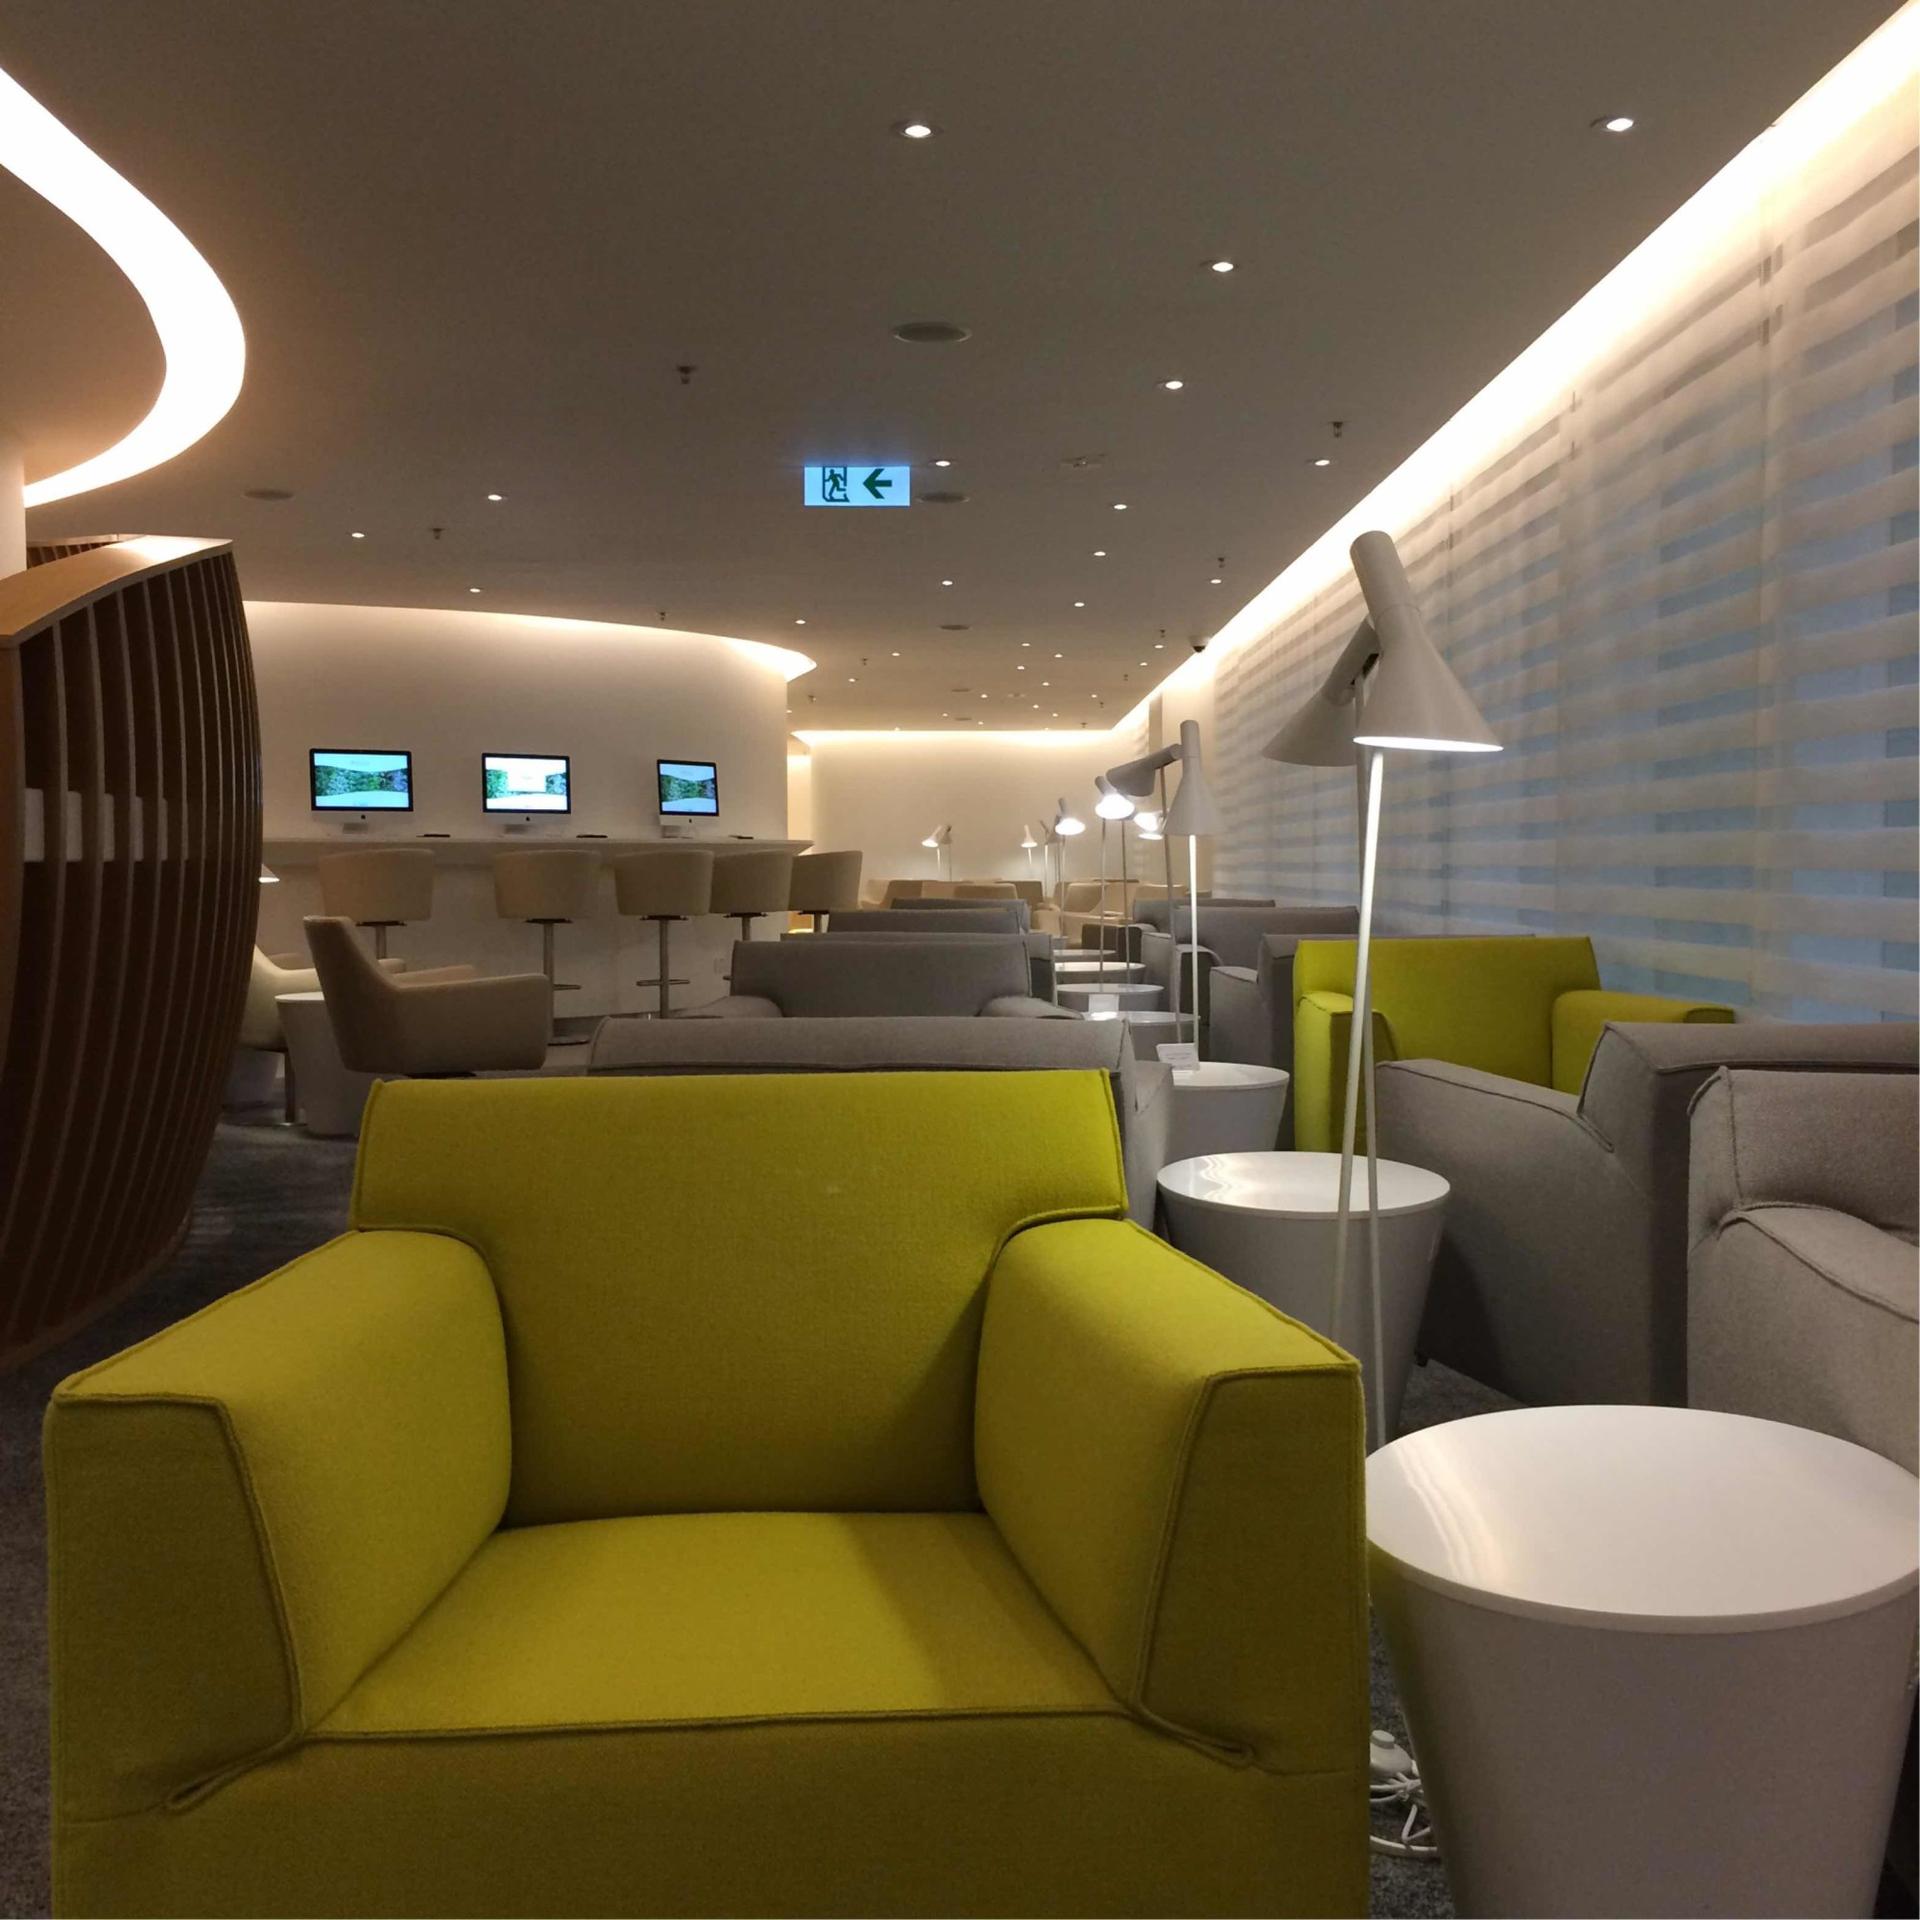 SkyTeam Lounge image 8 of 19